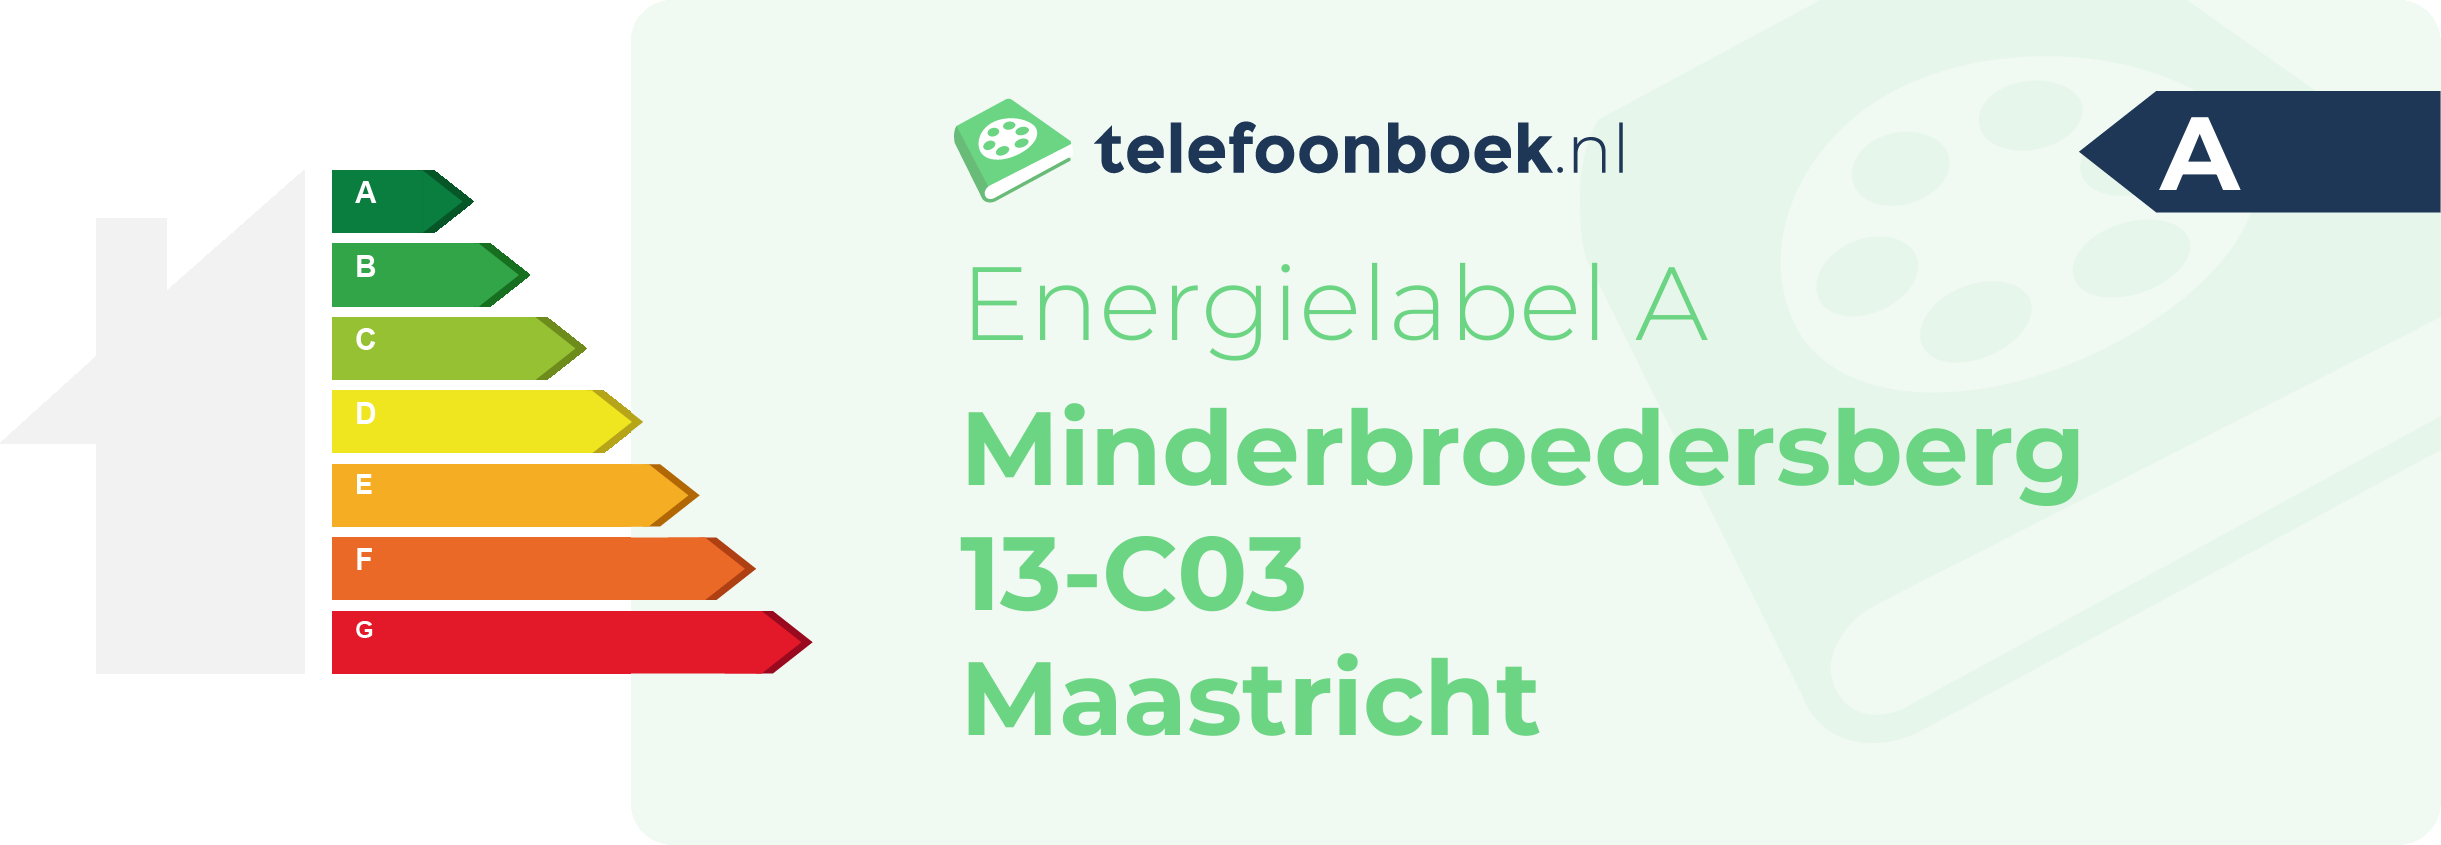 Energielabel Minderbroedersberg 13-C03 Maastricht